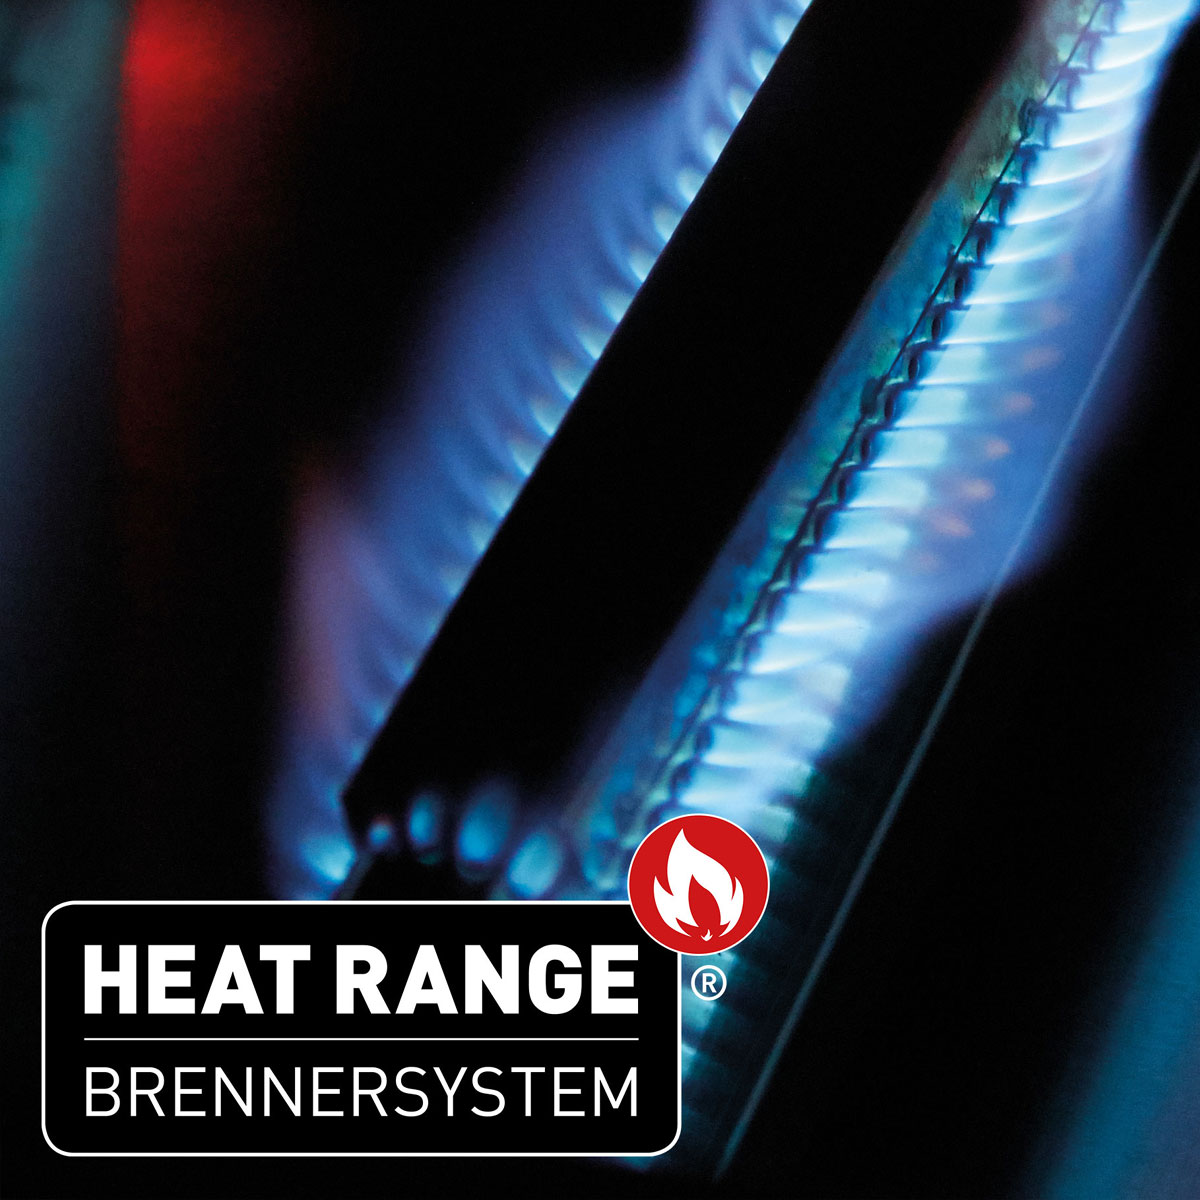 Enders Monroe Pro X 3 S Turbo Heat Range